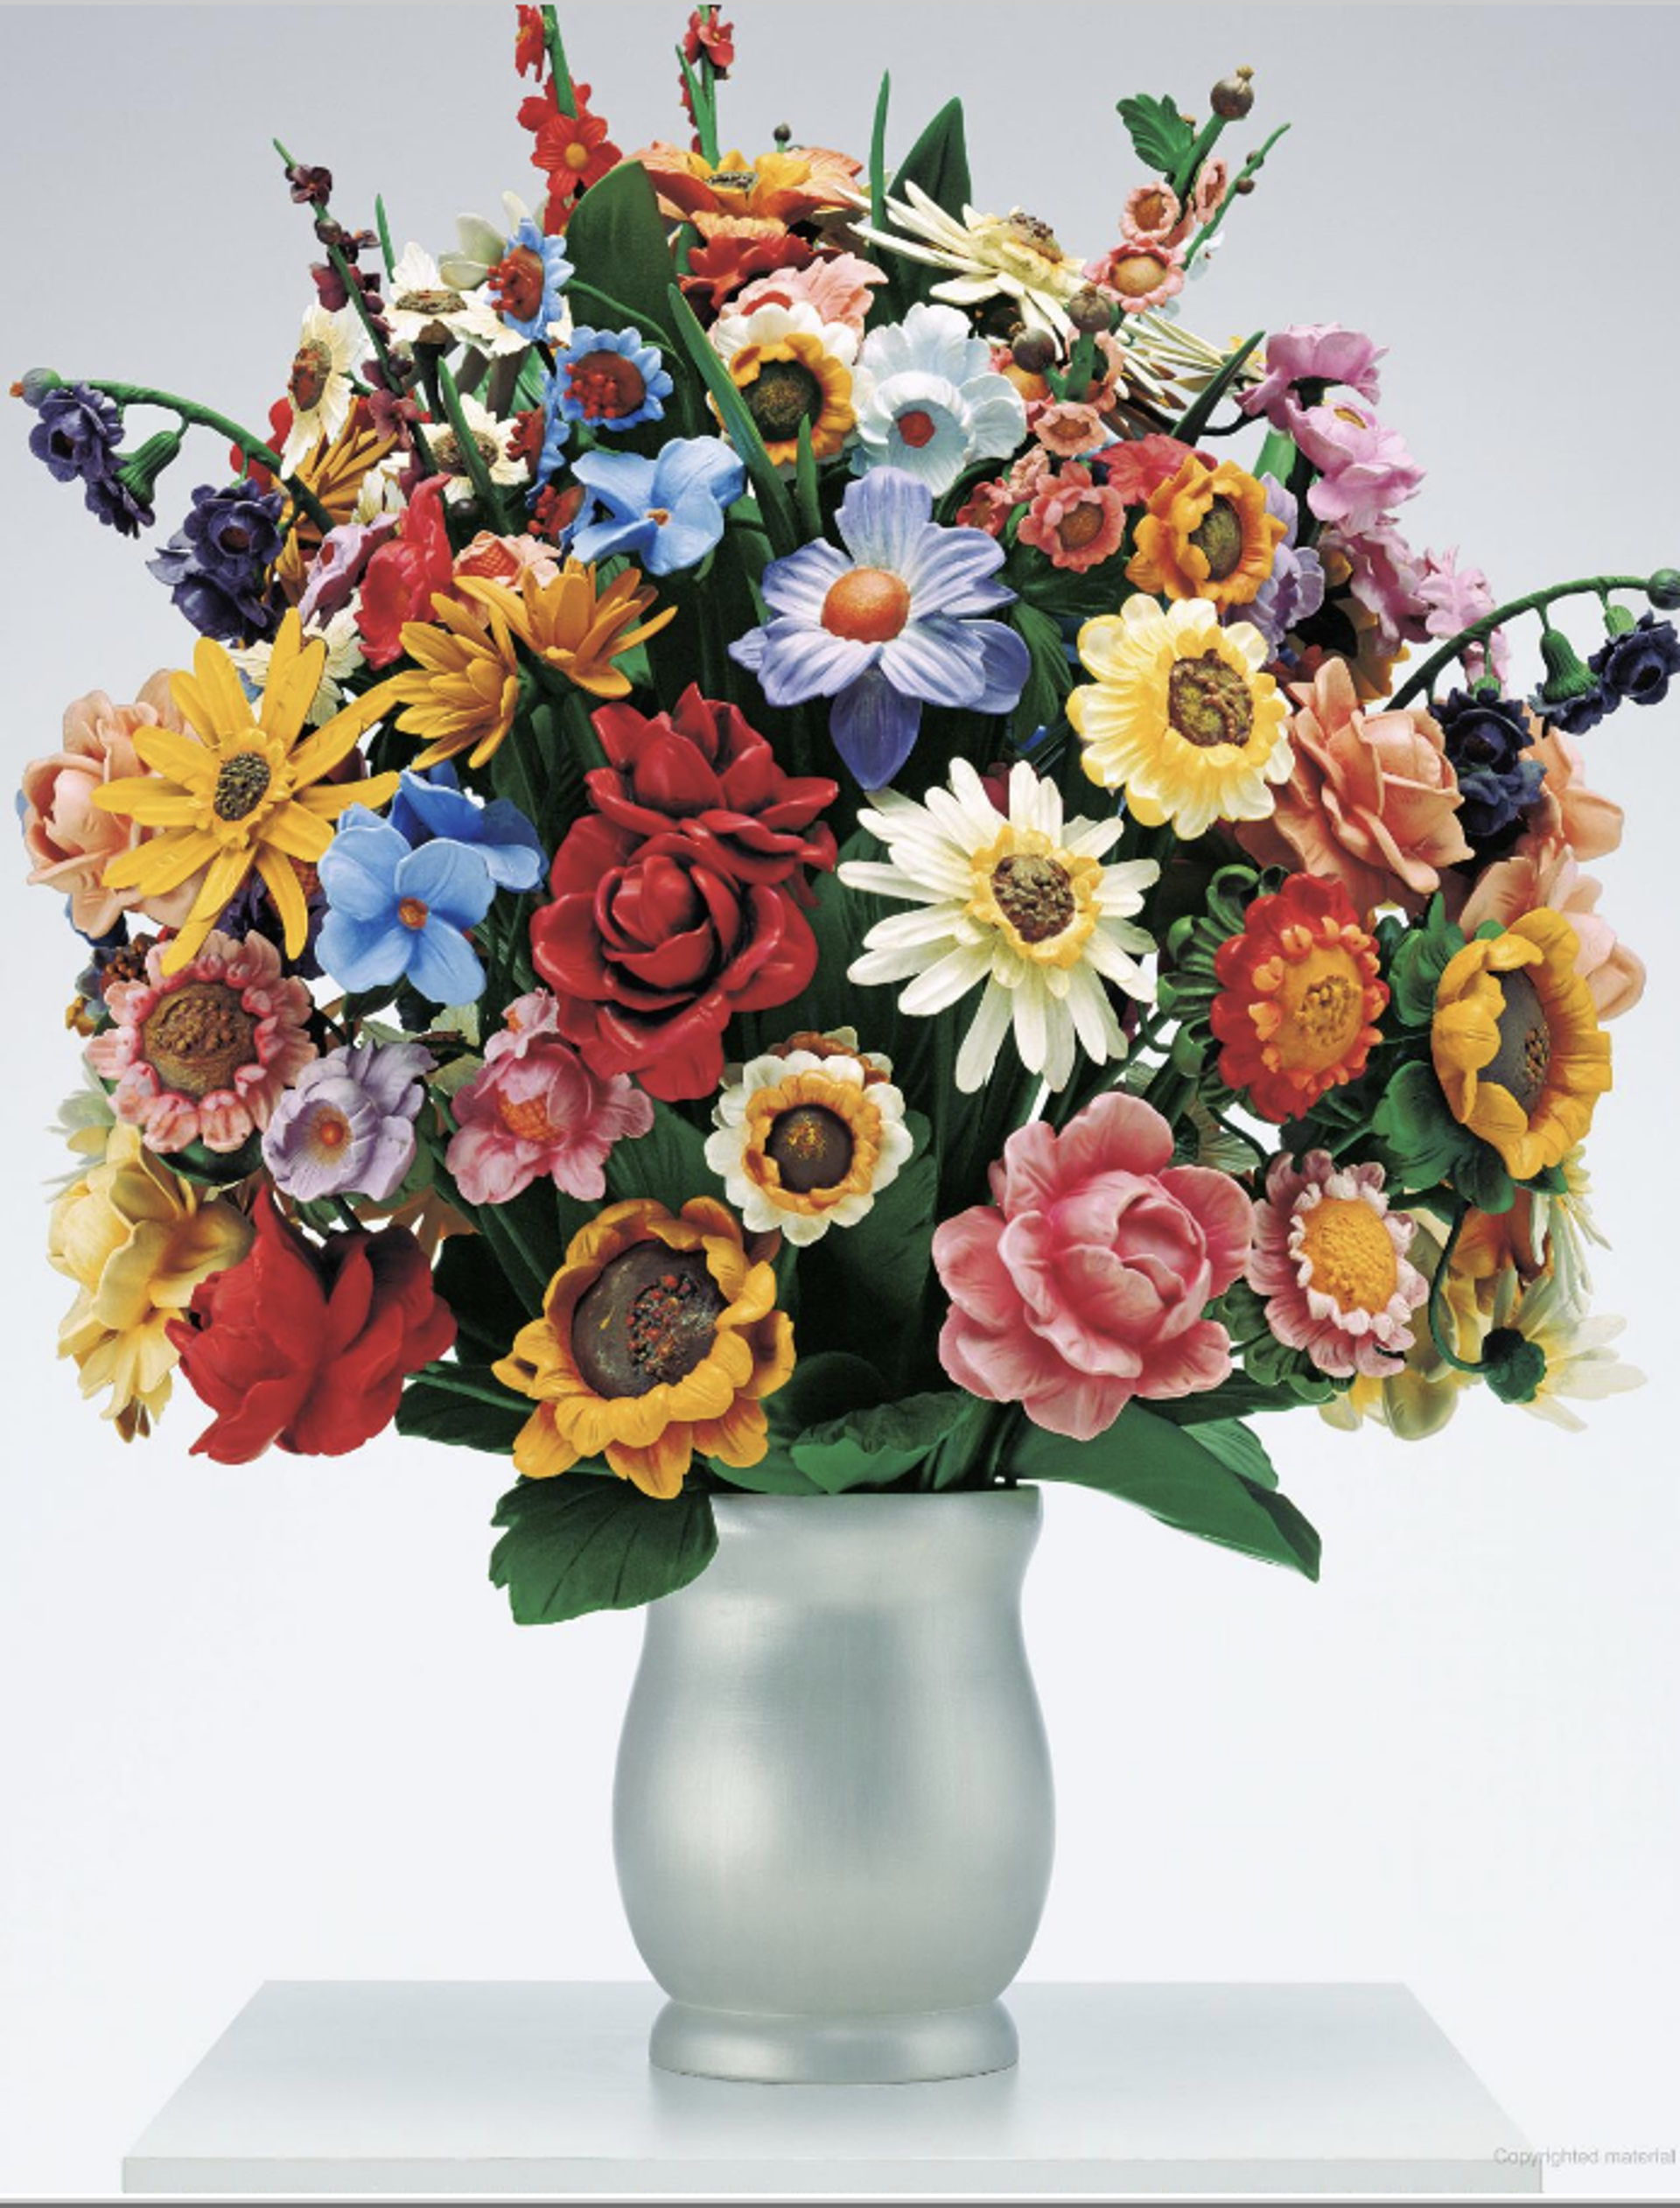 Jeff Koons: A Retrospective (Whitney Museum of American Art) by Jeff Koons